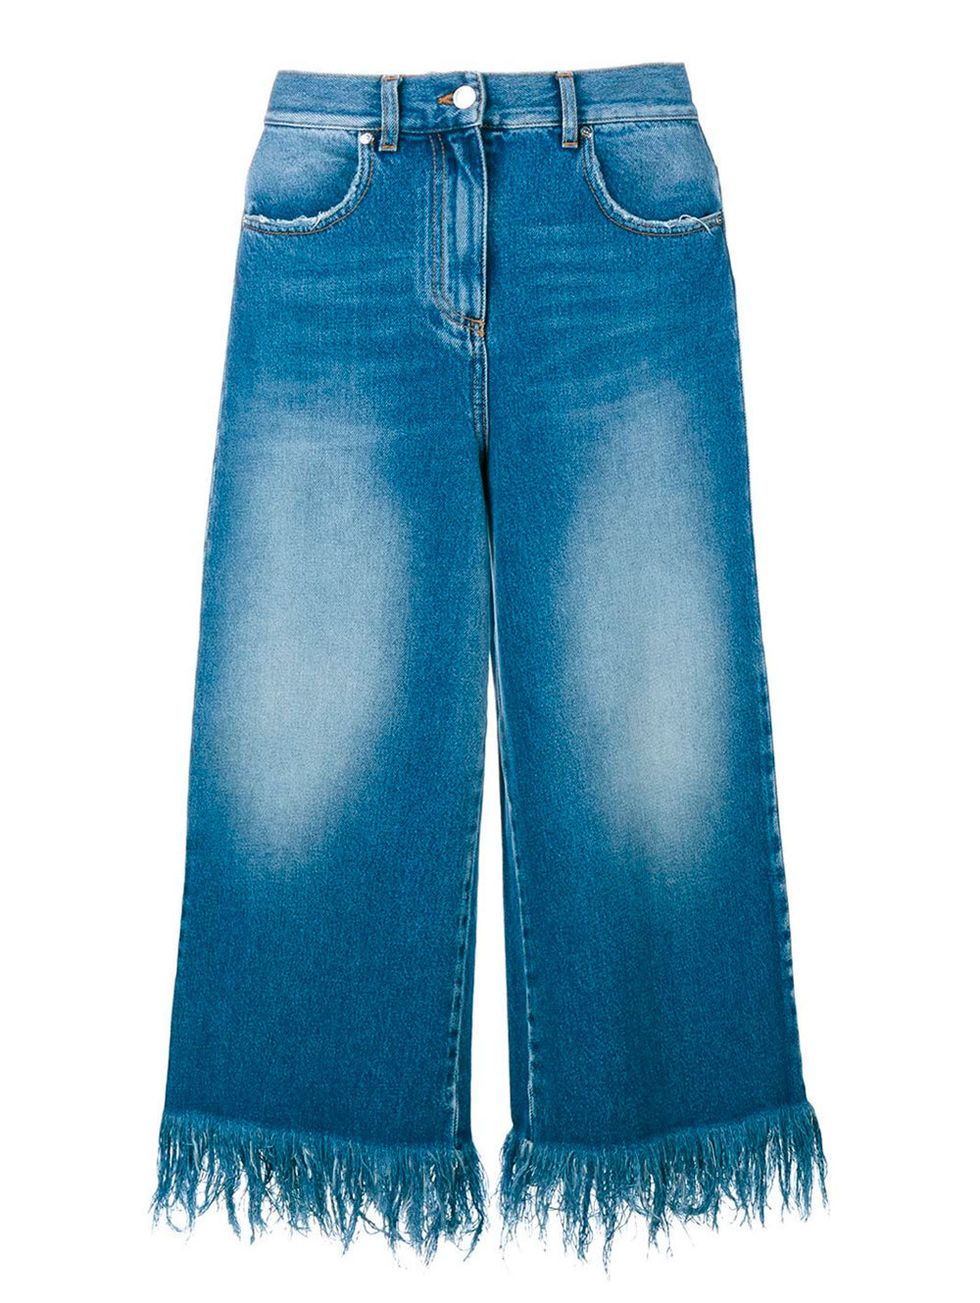 Blue, Denim, Textile, Jeans, Pocket, White, Electric blue, Aqua, Azure, Teal, 